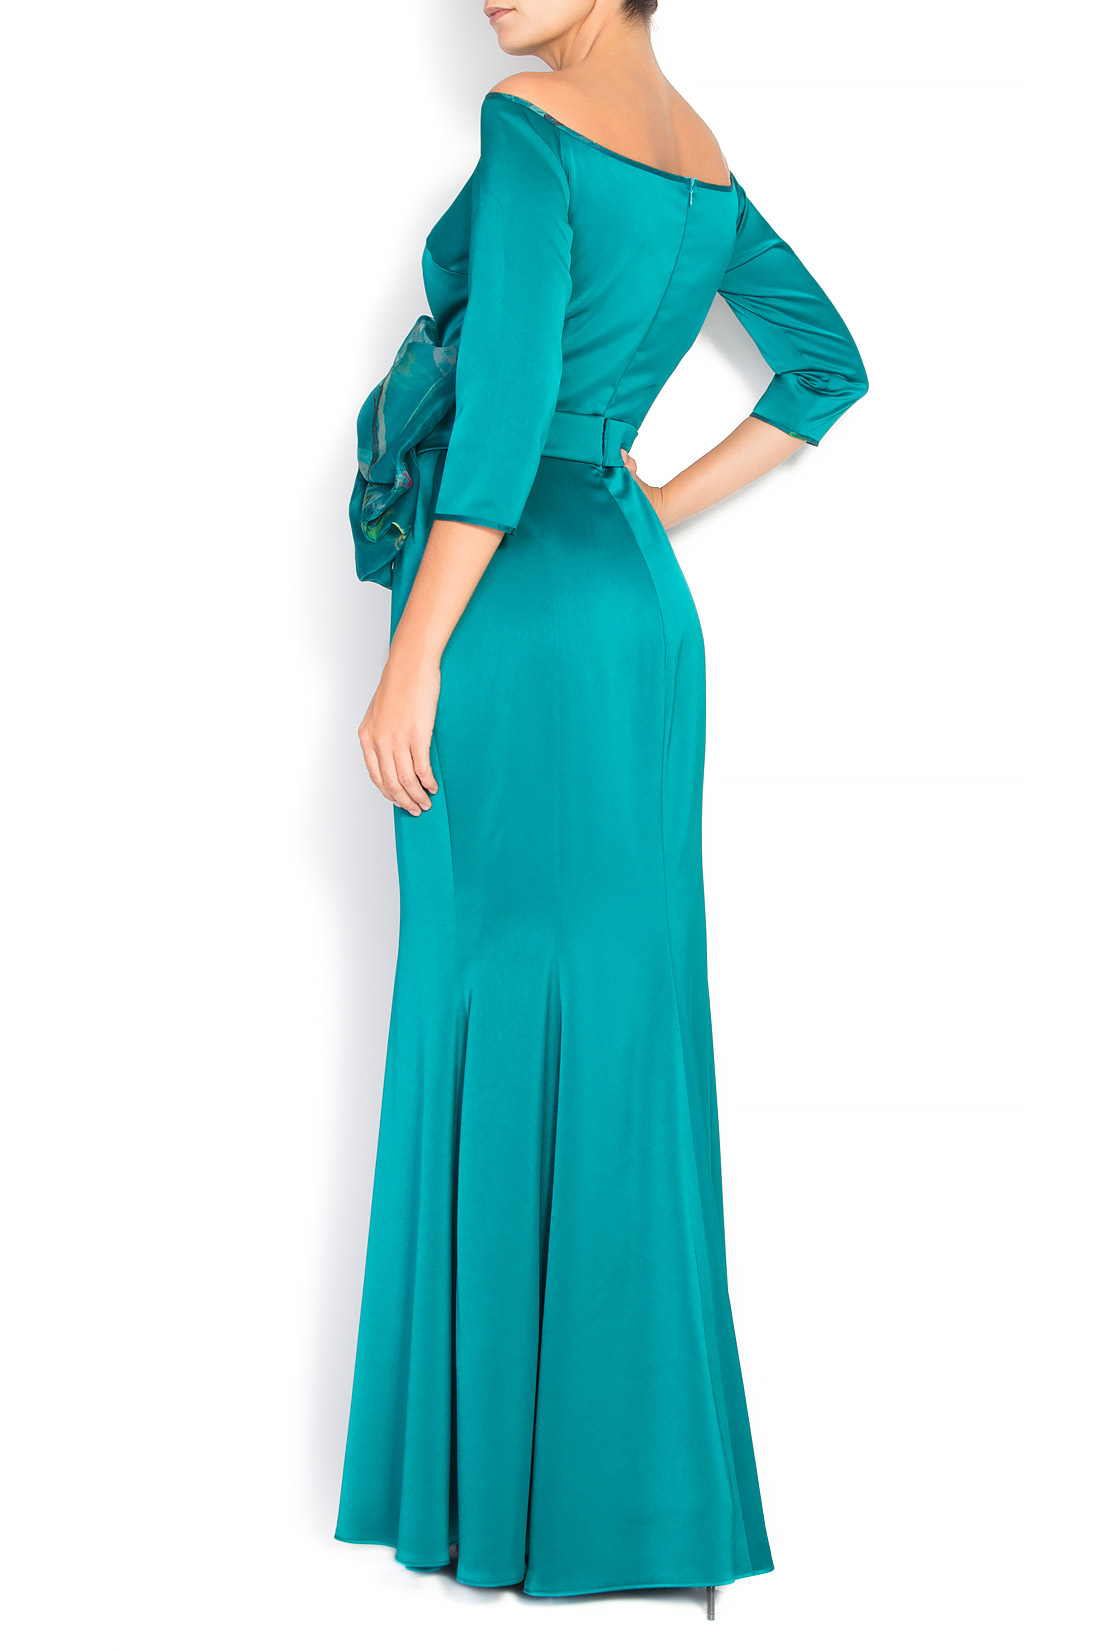 'Emerald Organza' silk gown Raffaela Moraru image 2